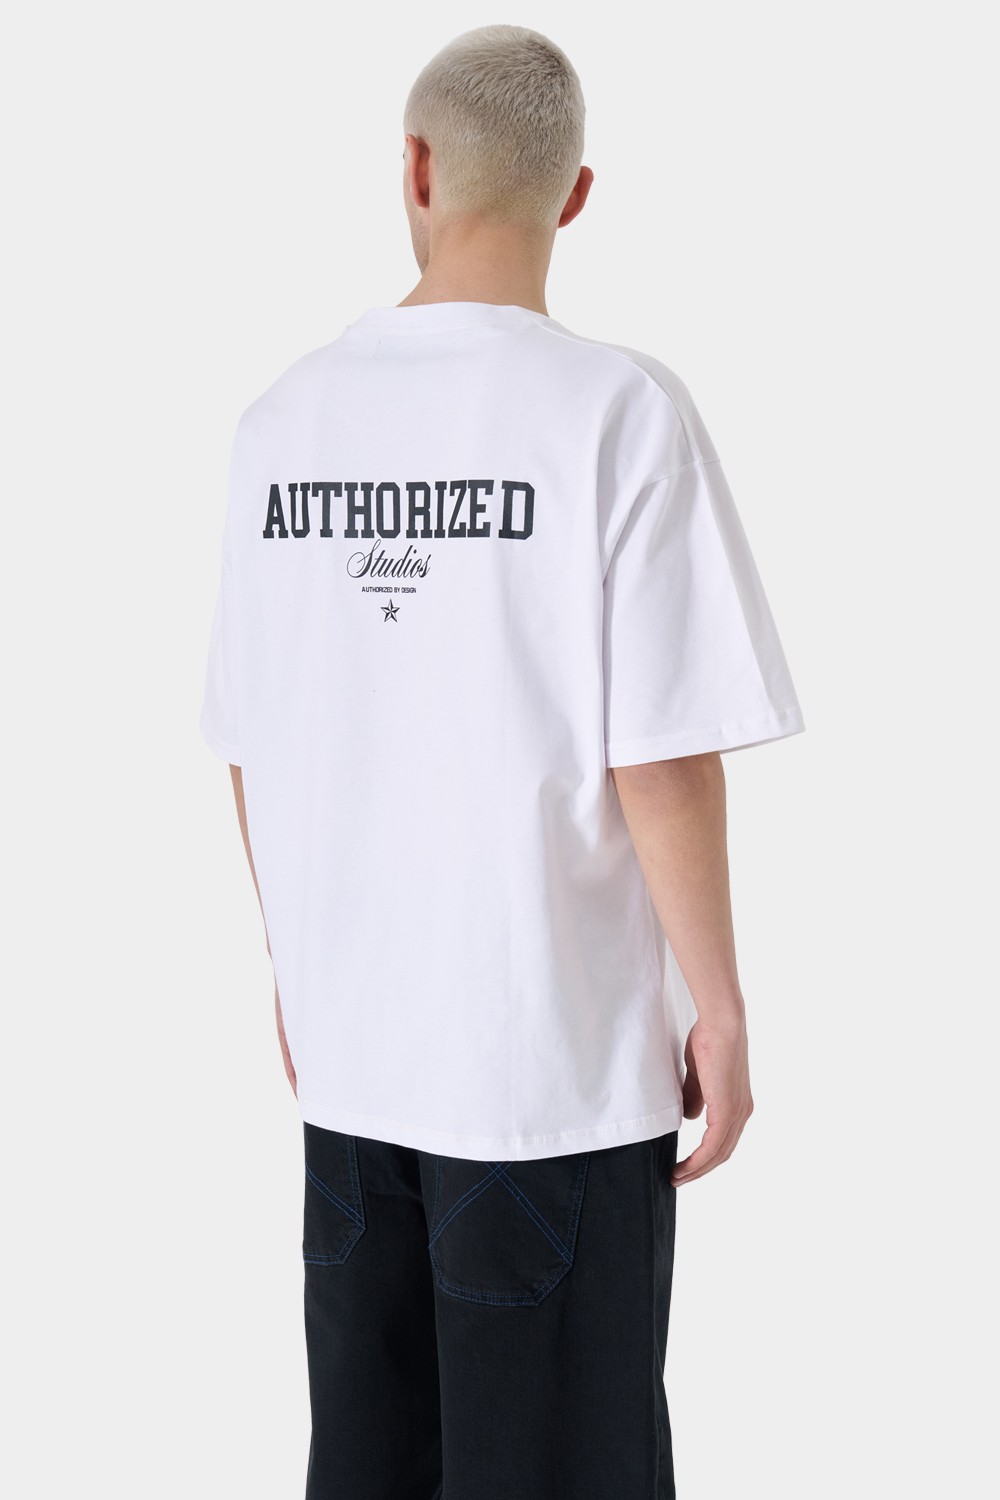 Authorized Studio Graphic T-Shirt (ATH-4)